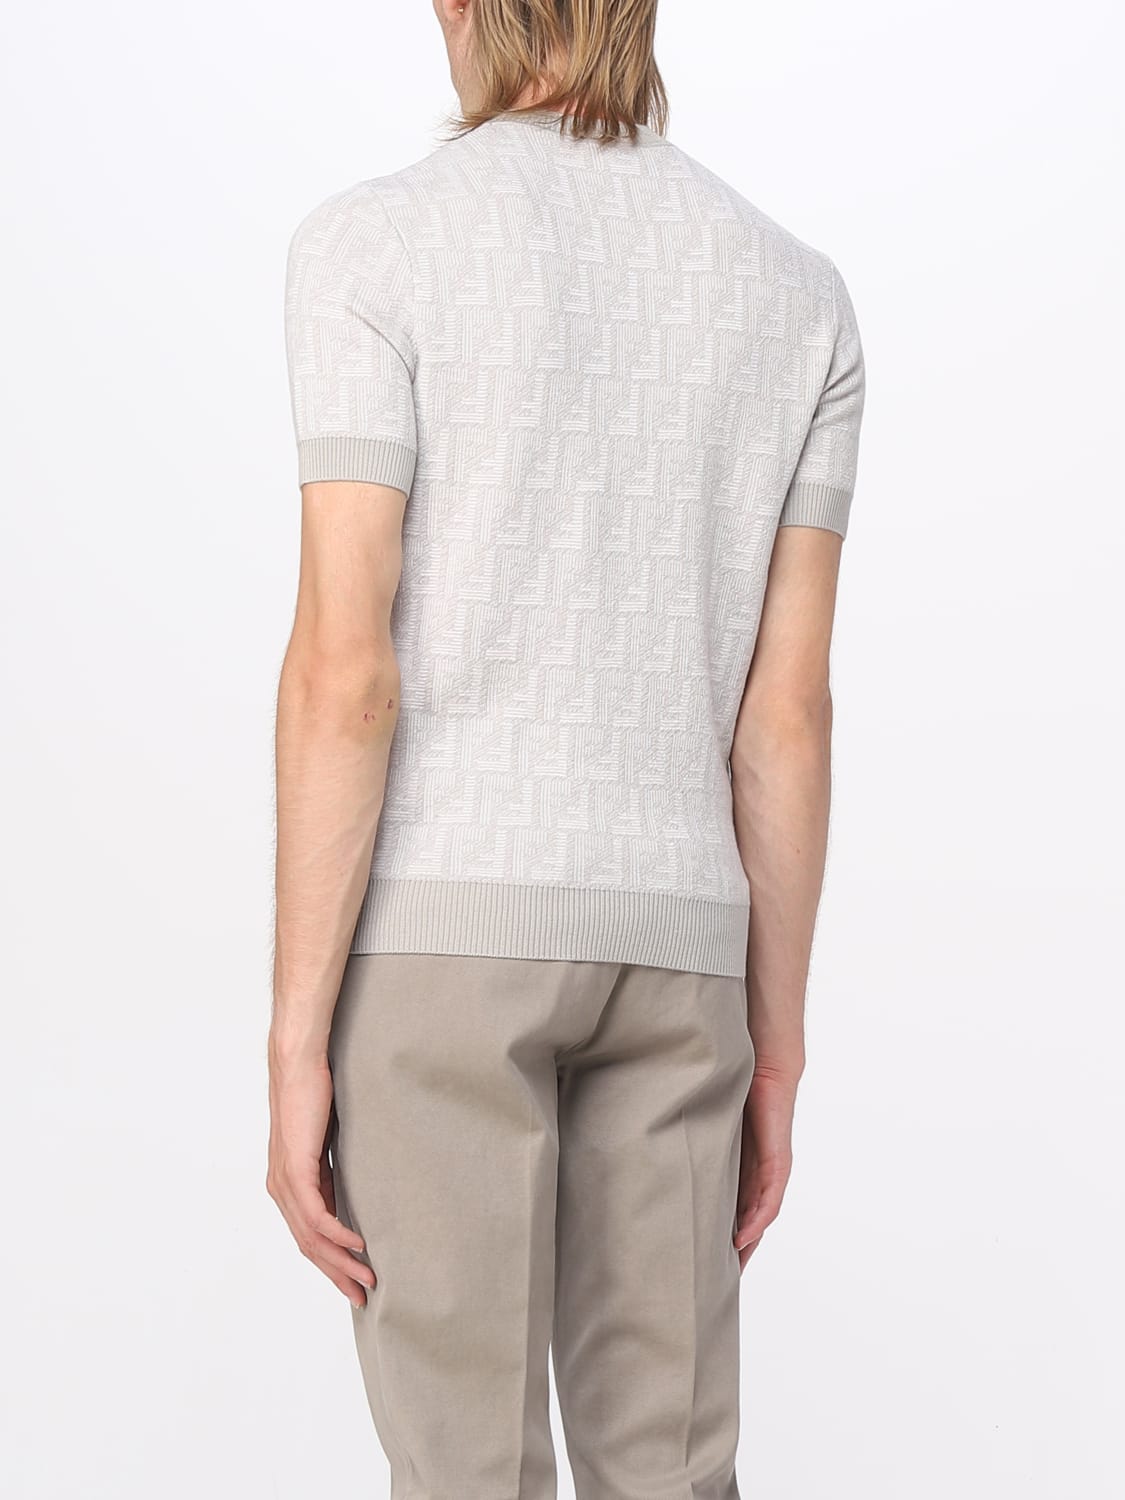 Louis Vuitton Polo shirts for Men - Vestiaire Collective